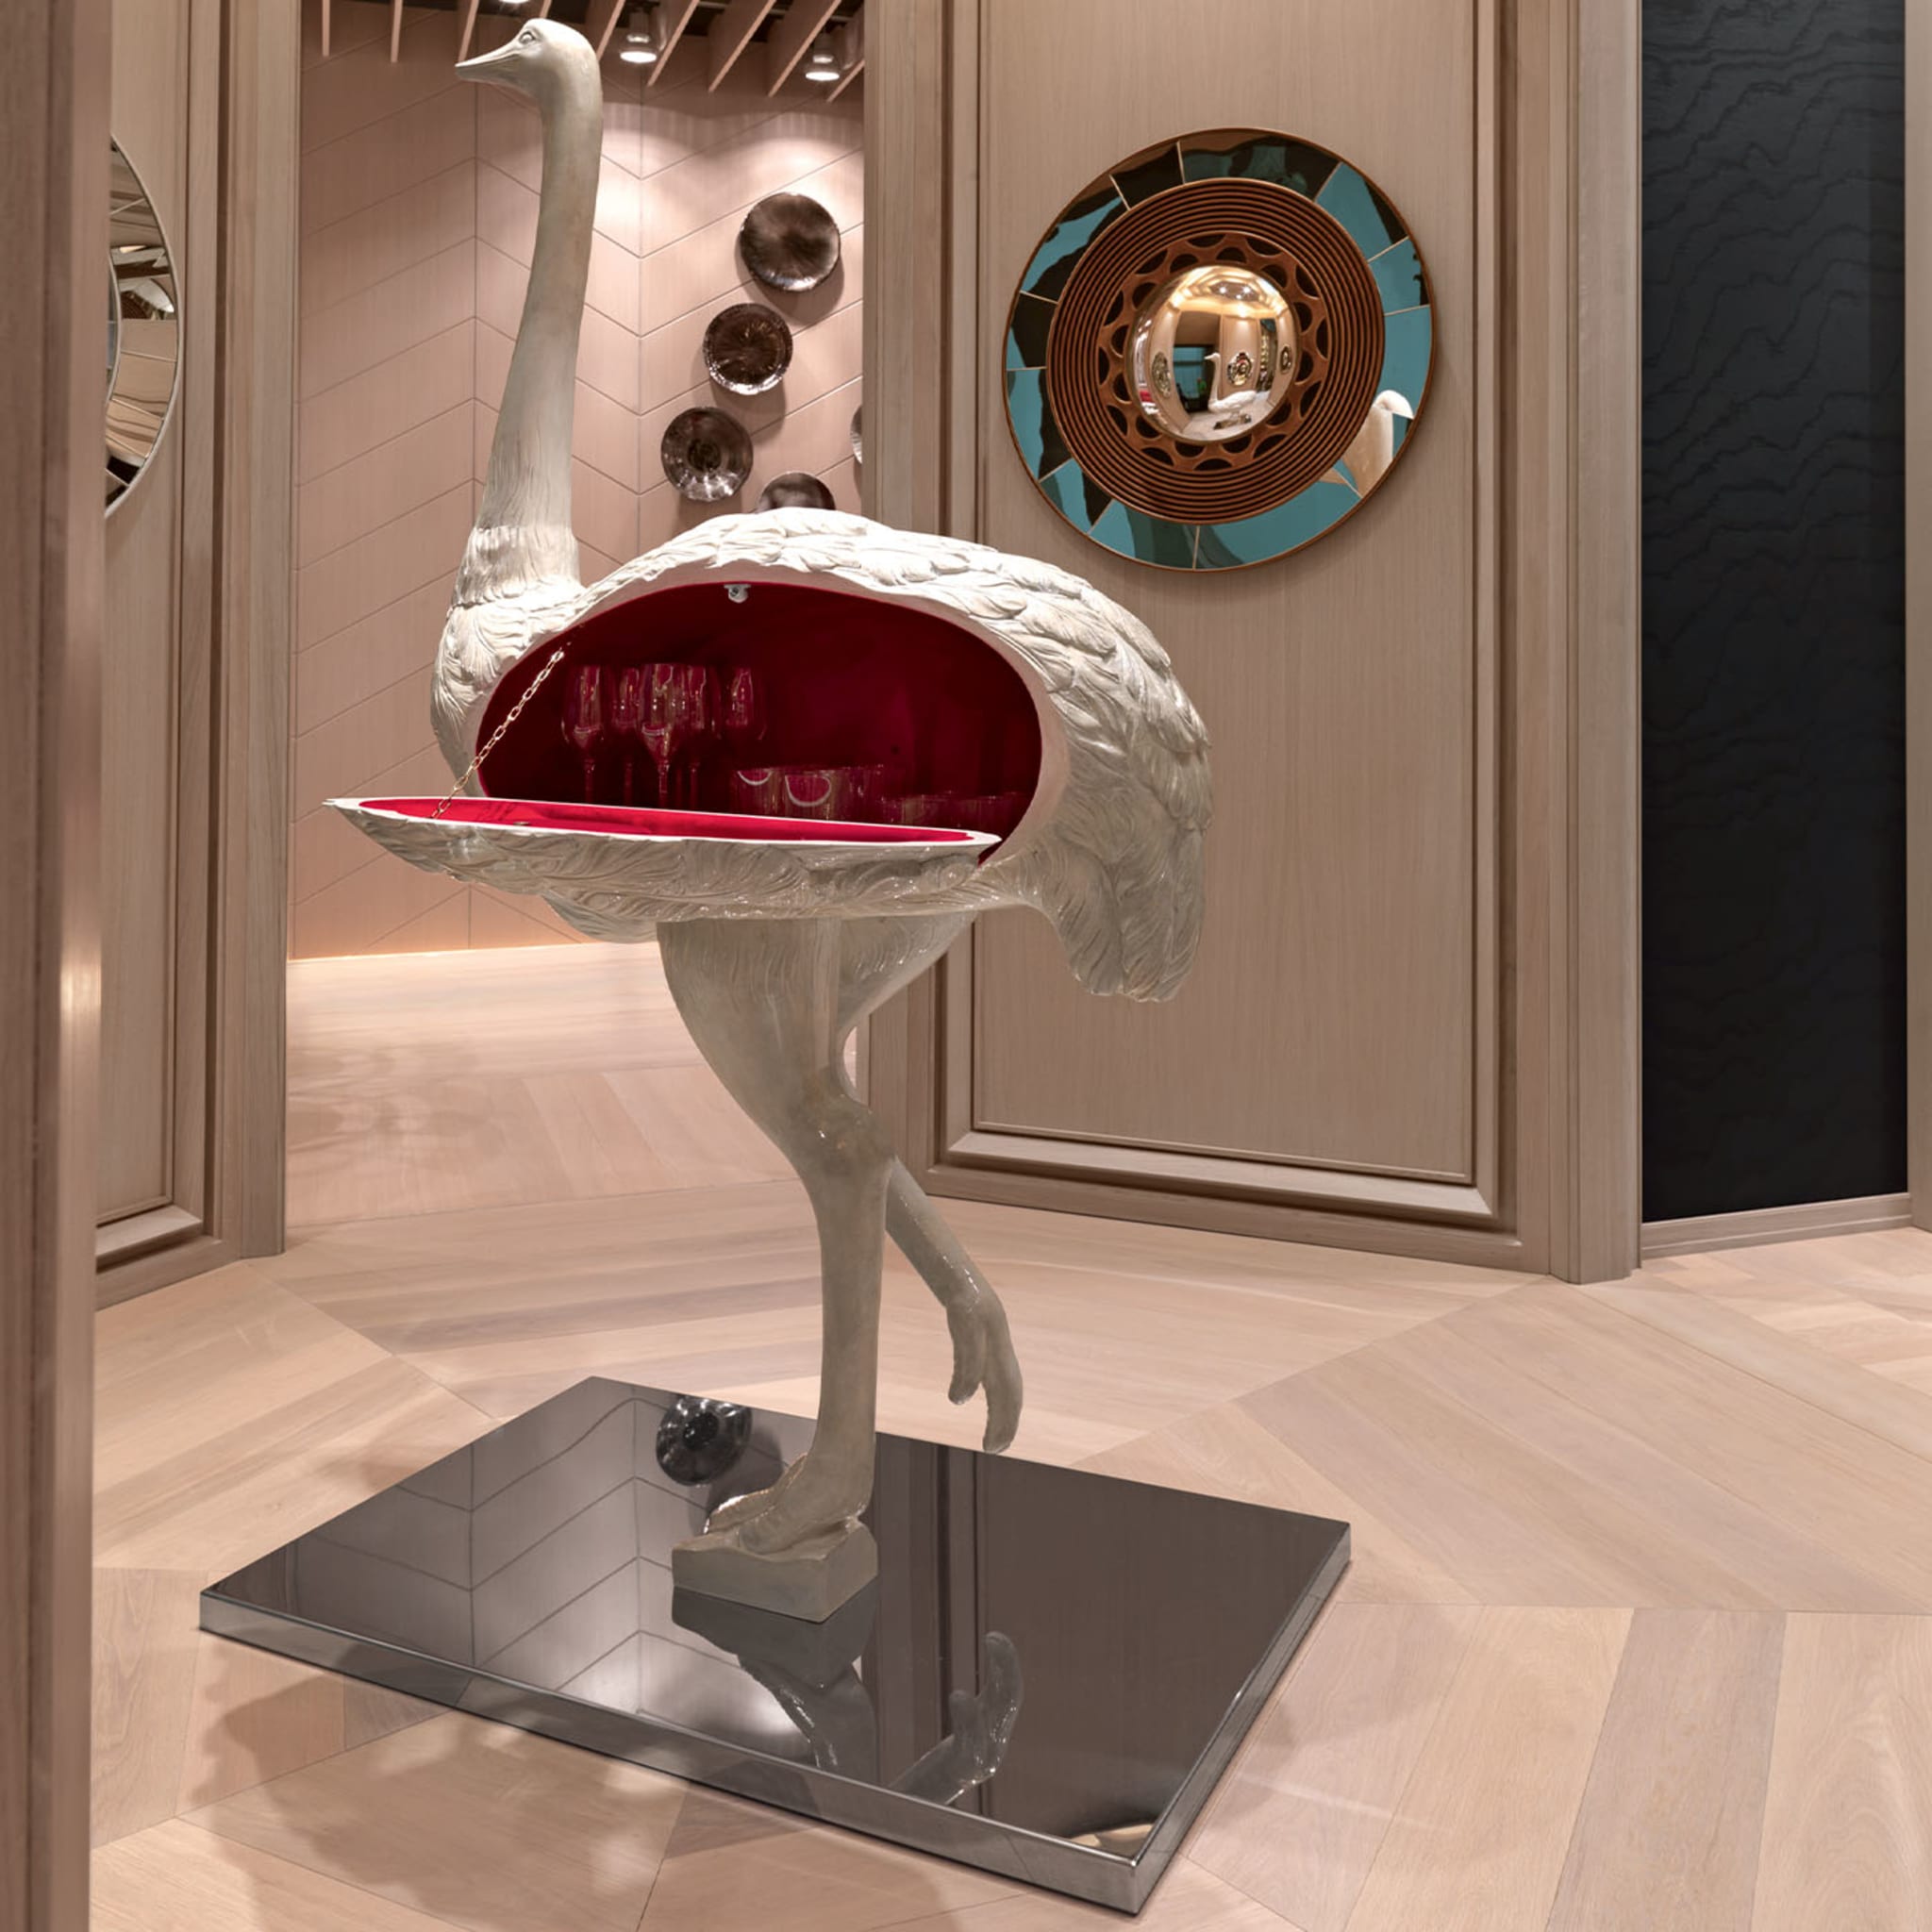 Lizzy Ostrich Cabinet Designed By Piero Manara - Alternative view 1